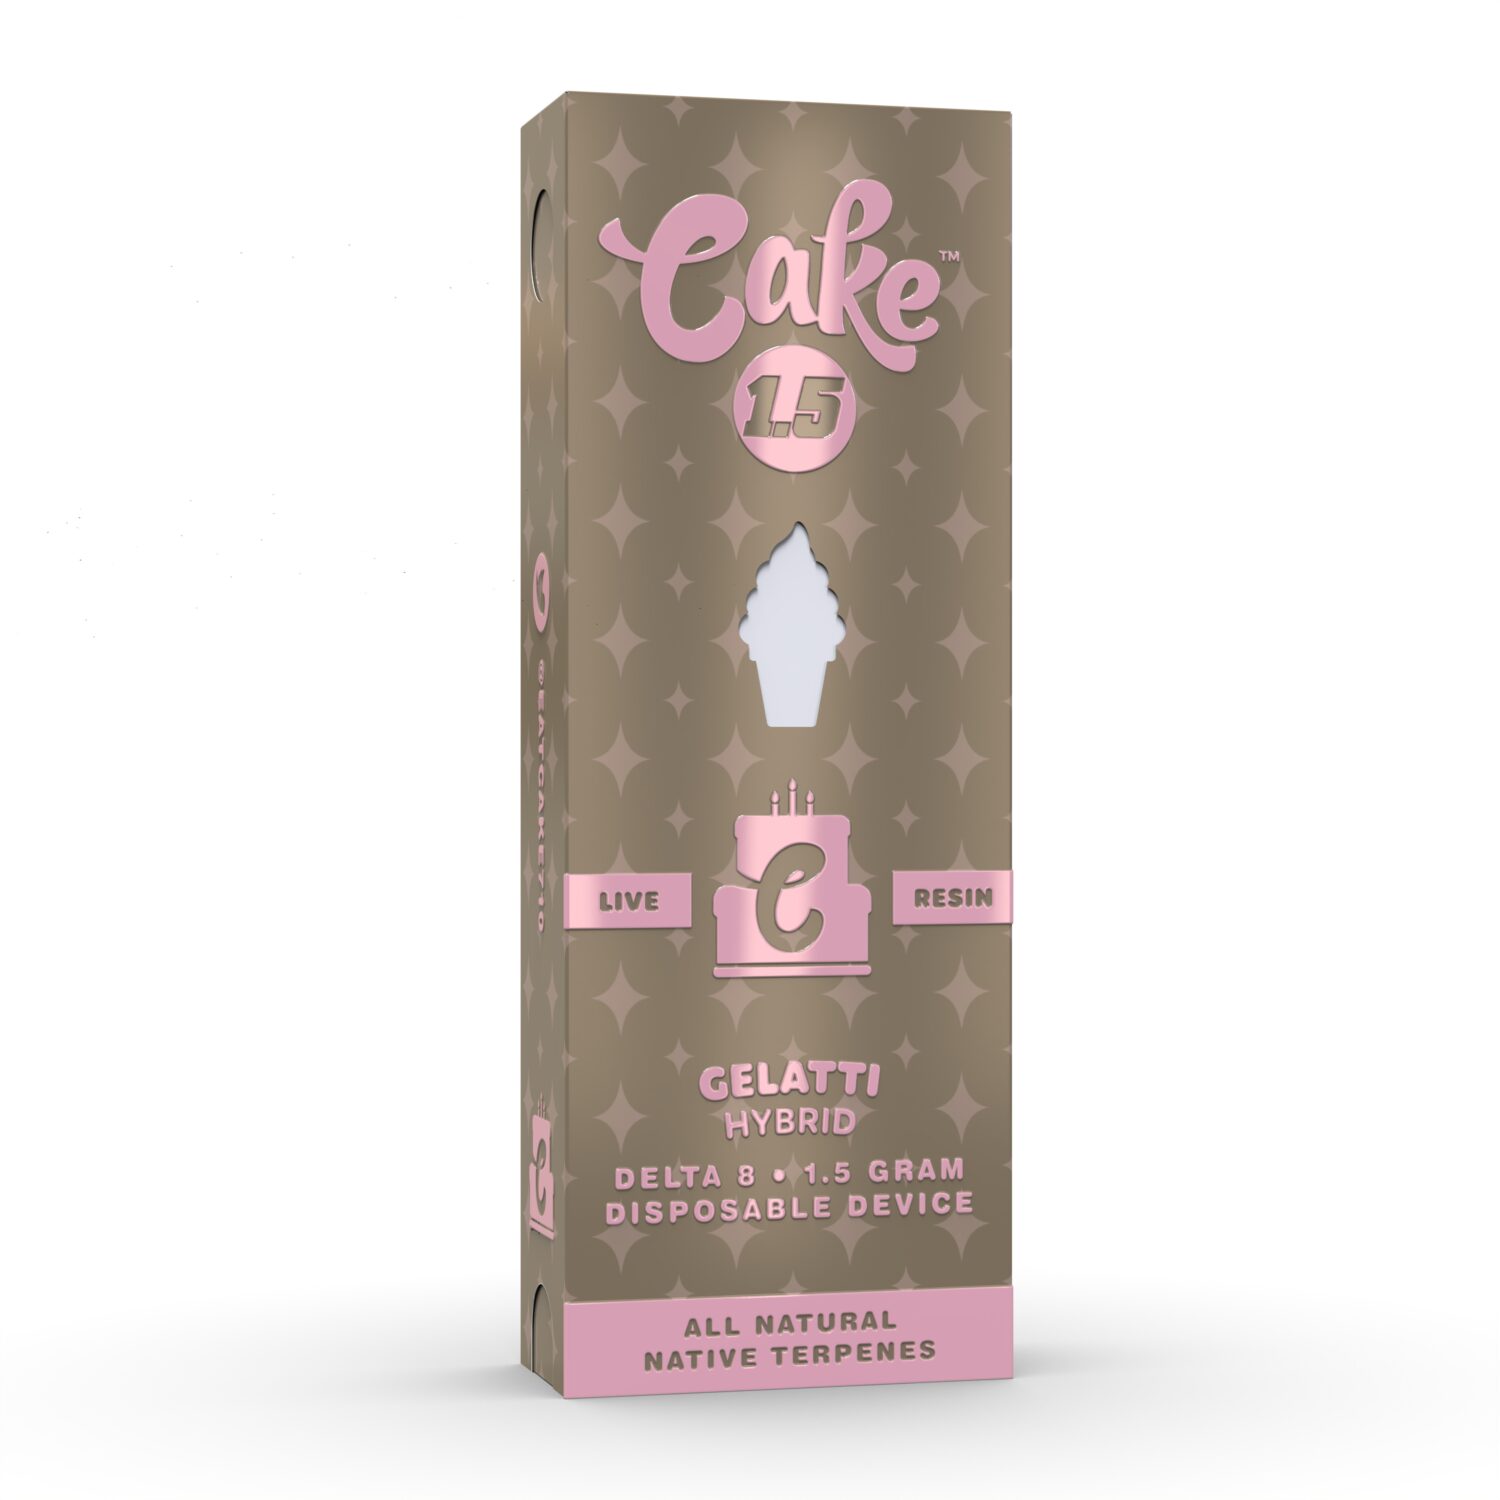 Cake-Delta-8-Live-Resin-Disposable-1.5g-Gelatti-1-scaled-1.jpg